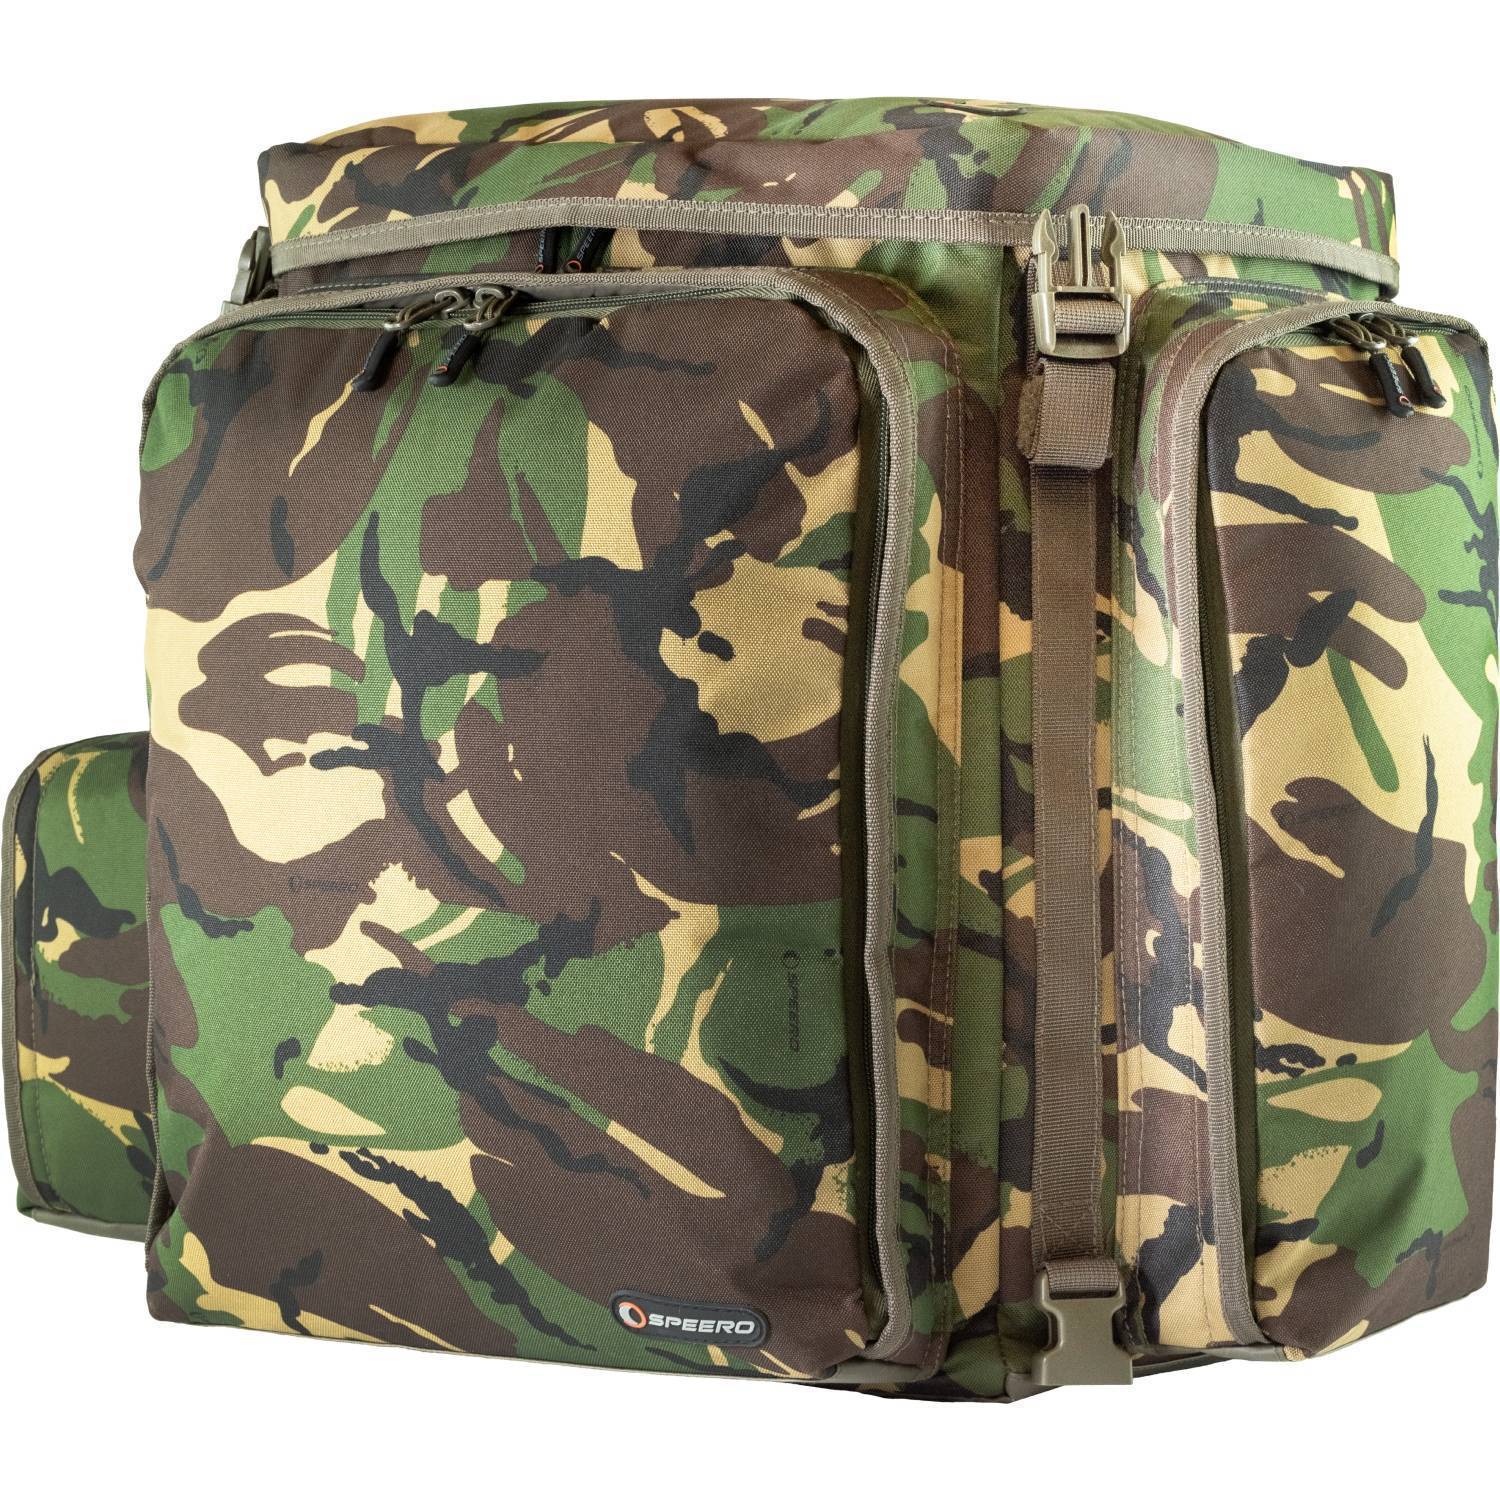 Speero Tackle Rucksack Bag DPM